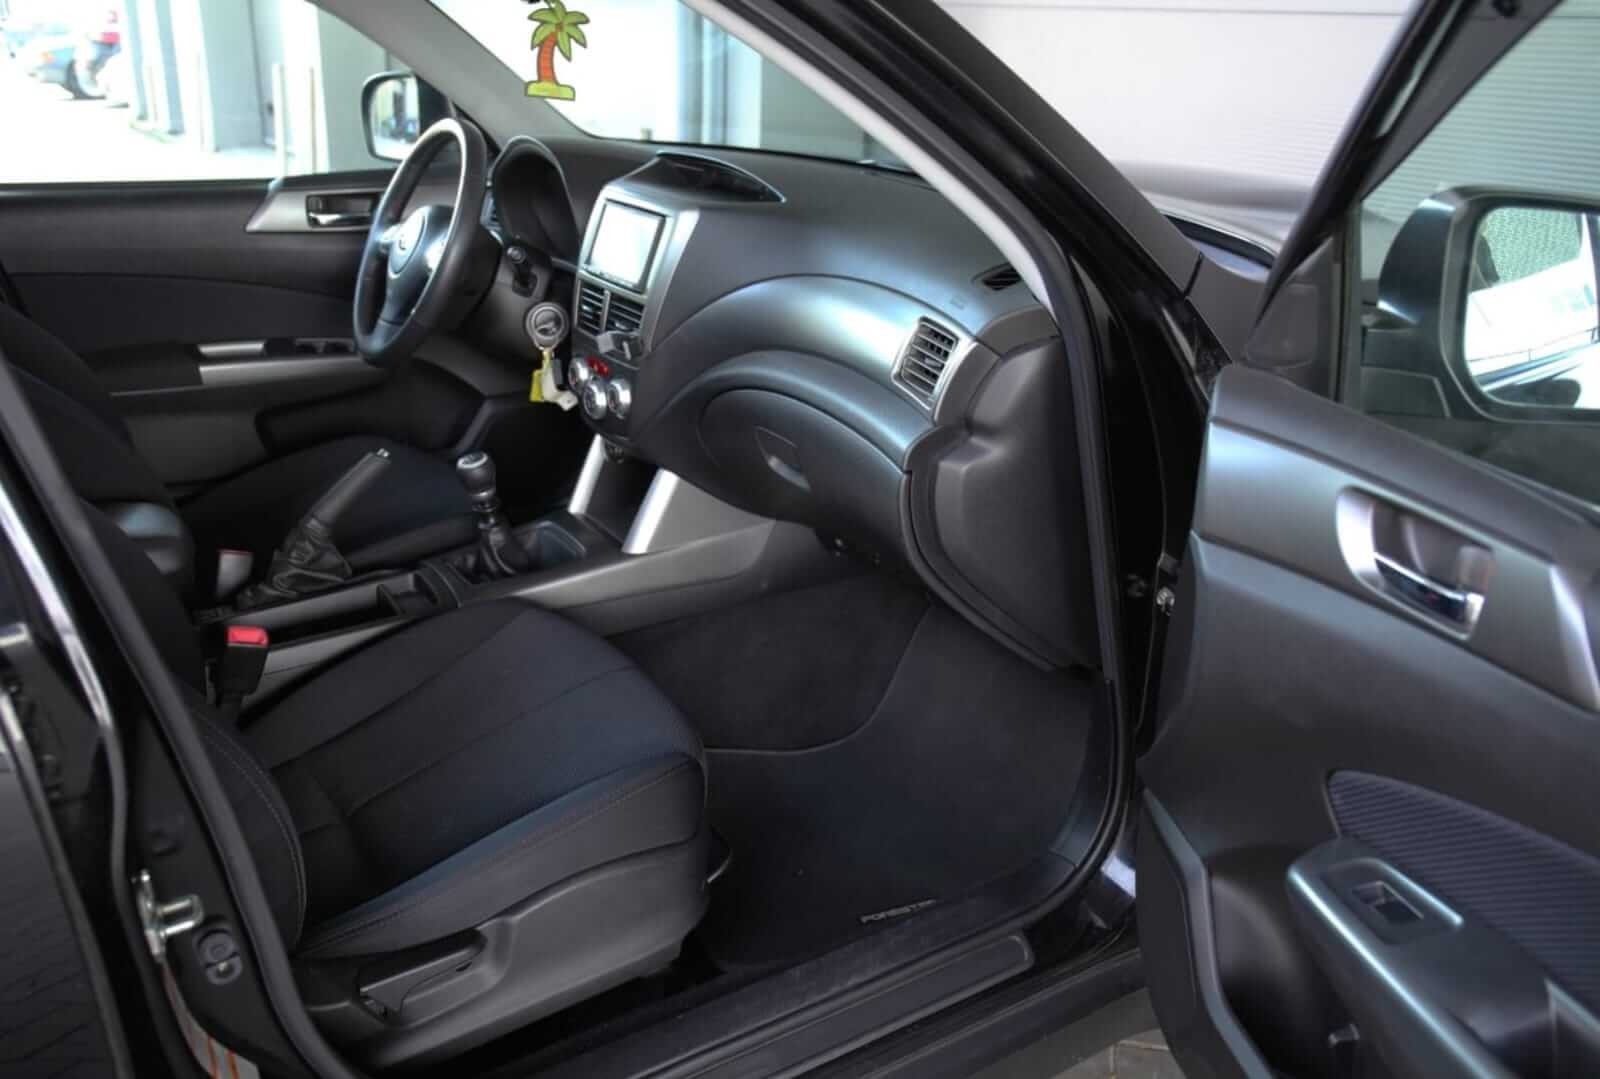 Subaru Forester front interior – by Next Level Automotive – Go to nextlevelautomotive.eu